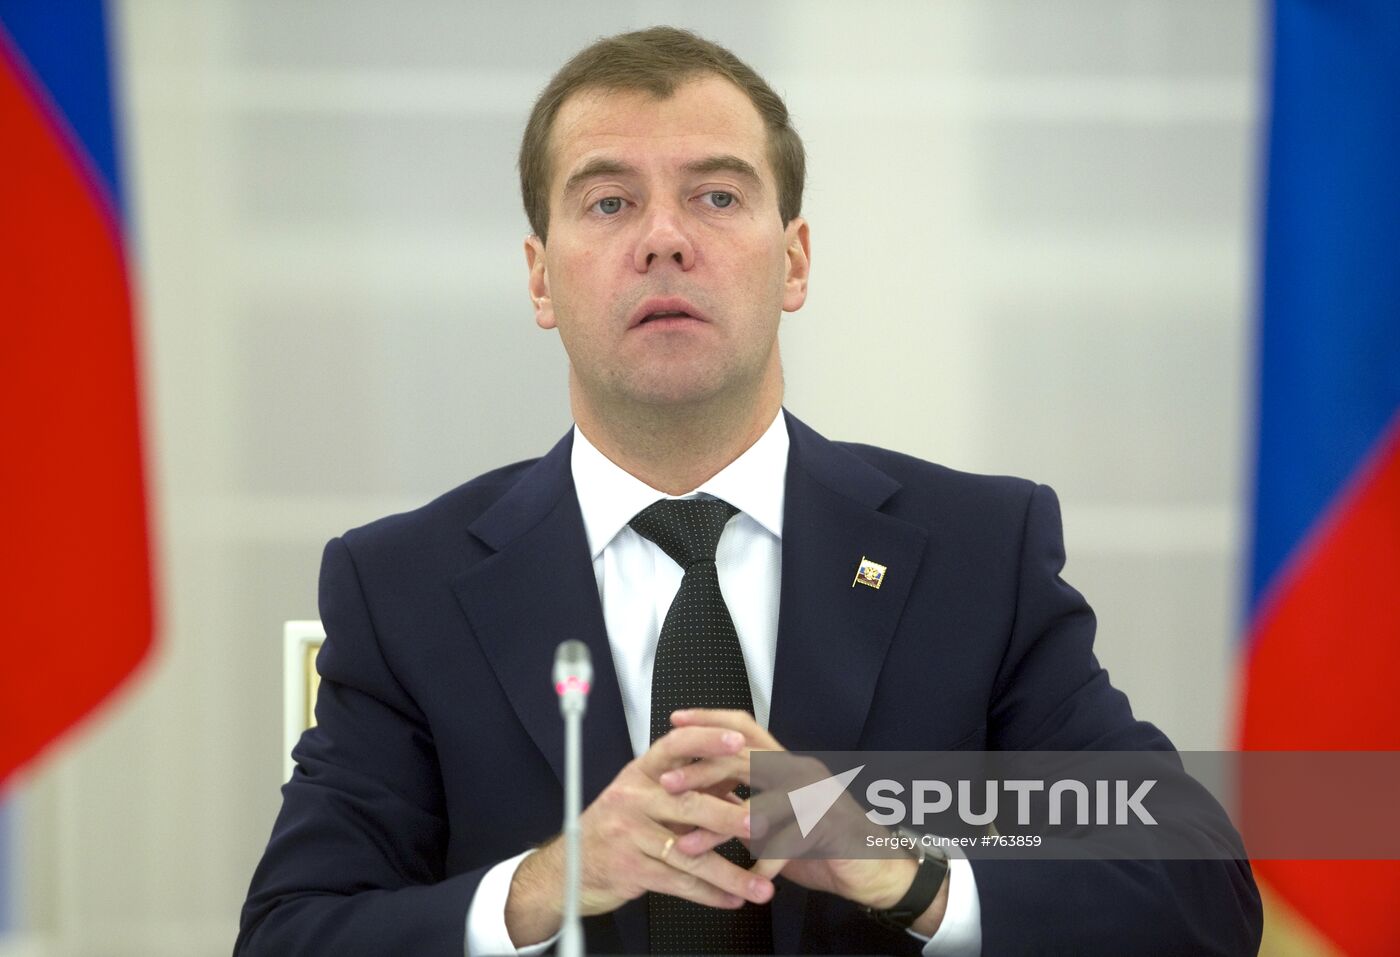 Dmitry Medvedev chairs meeting at Gorki residence